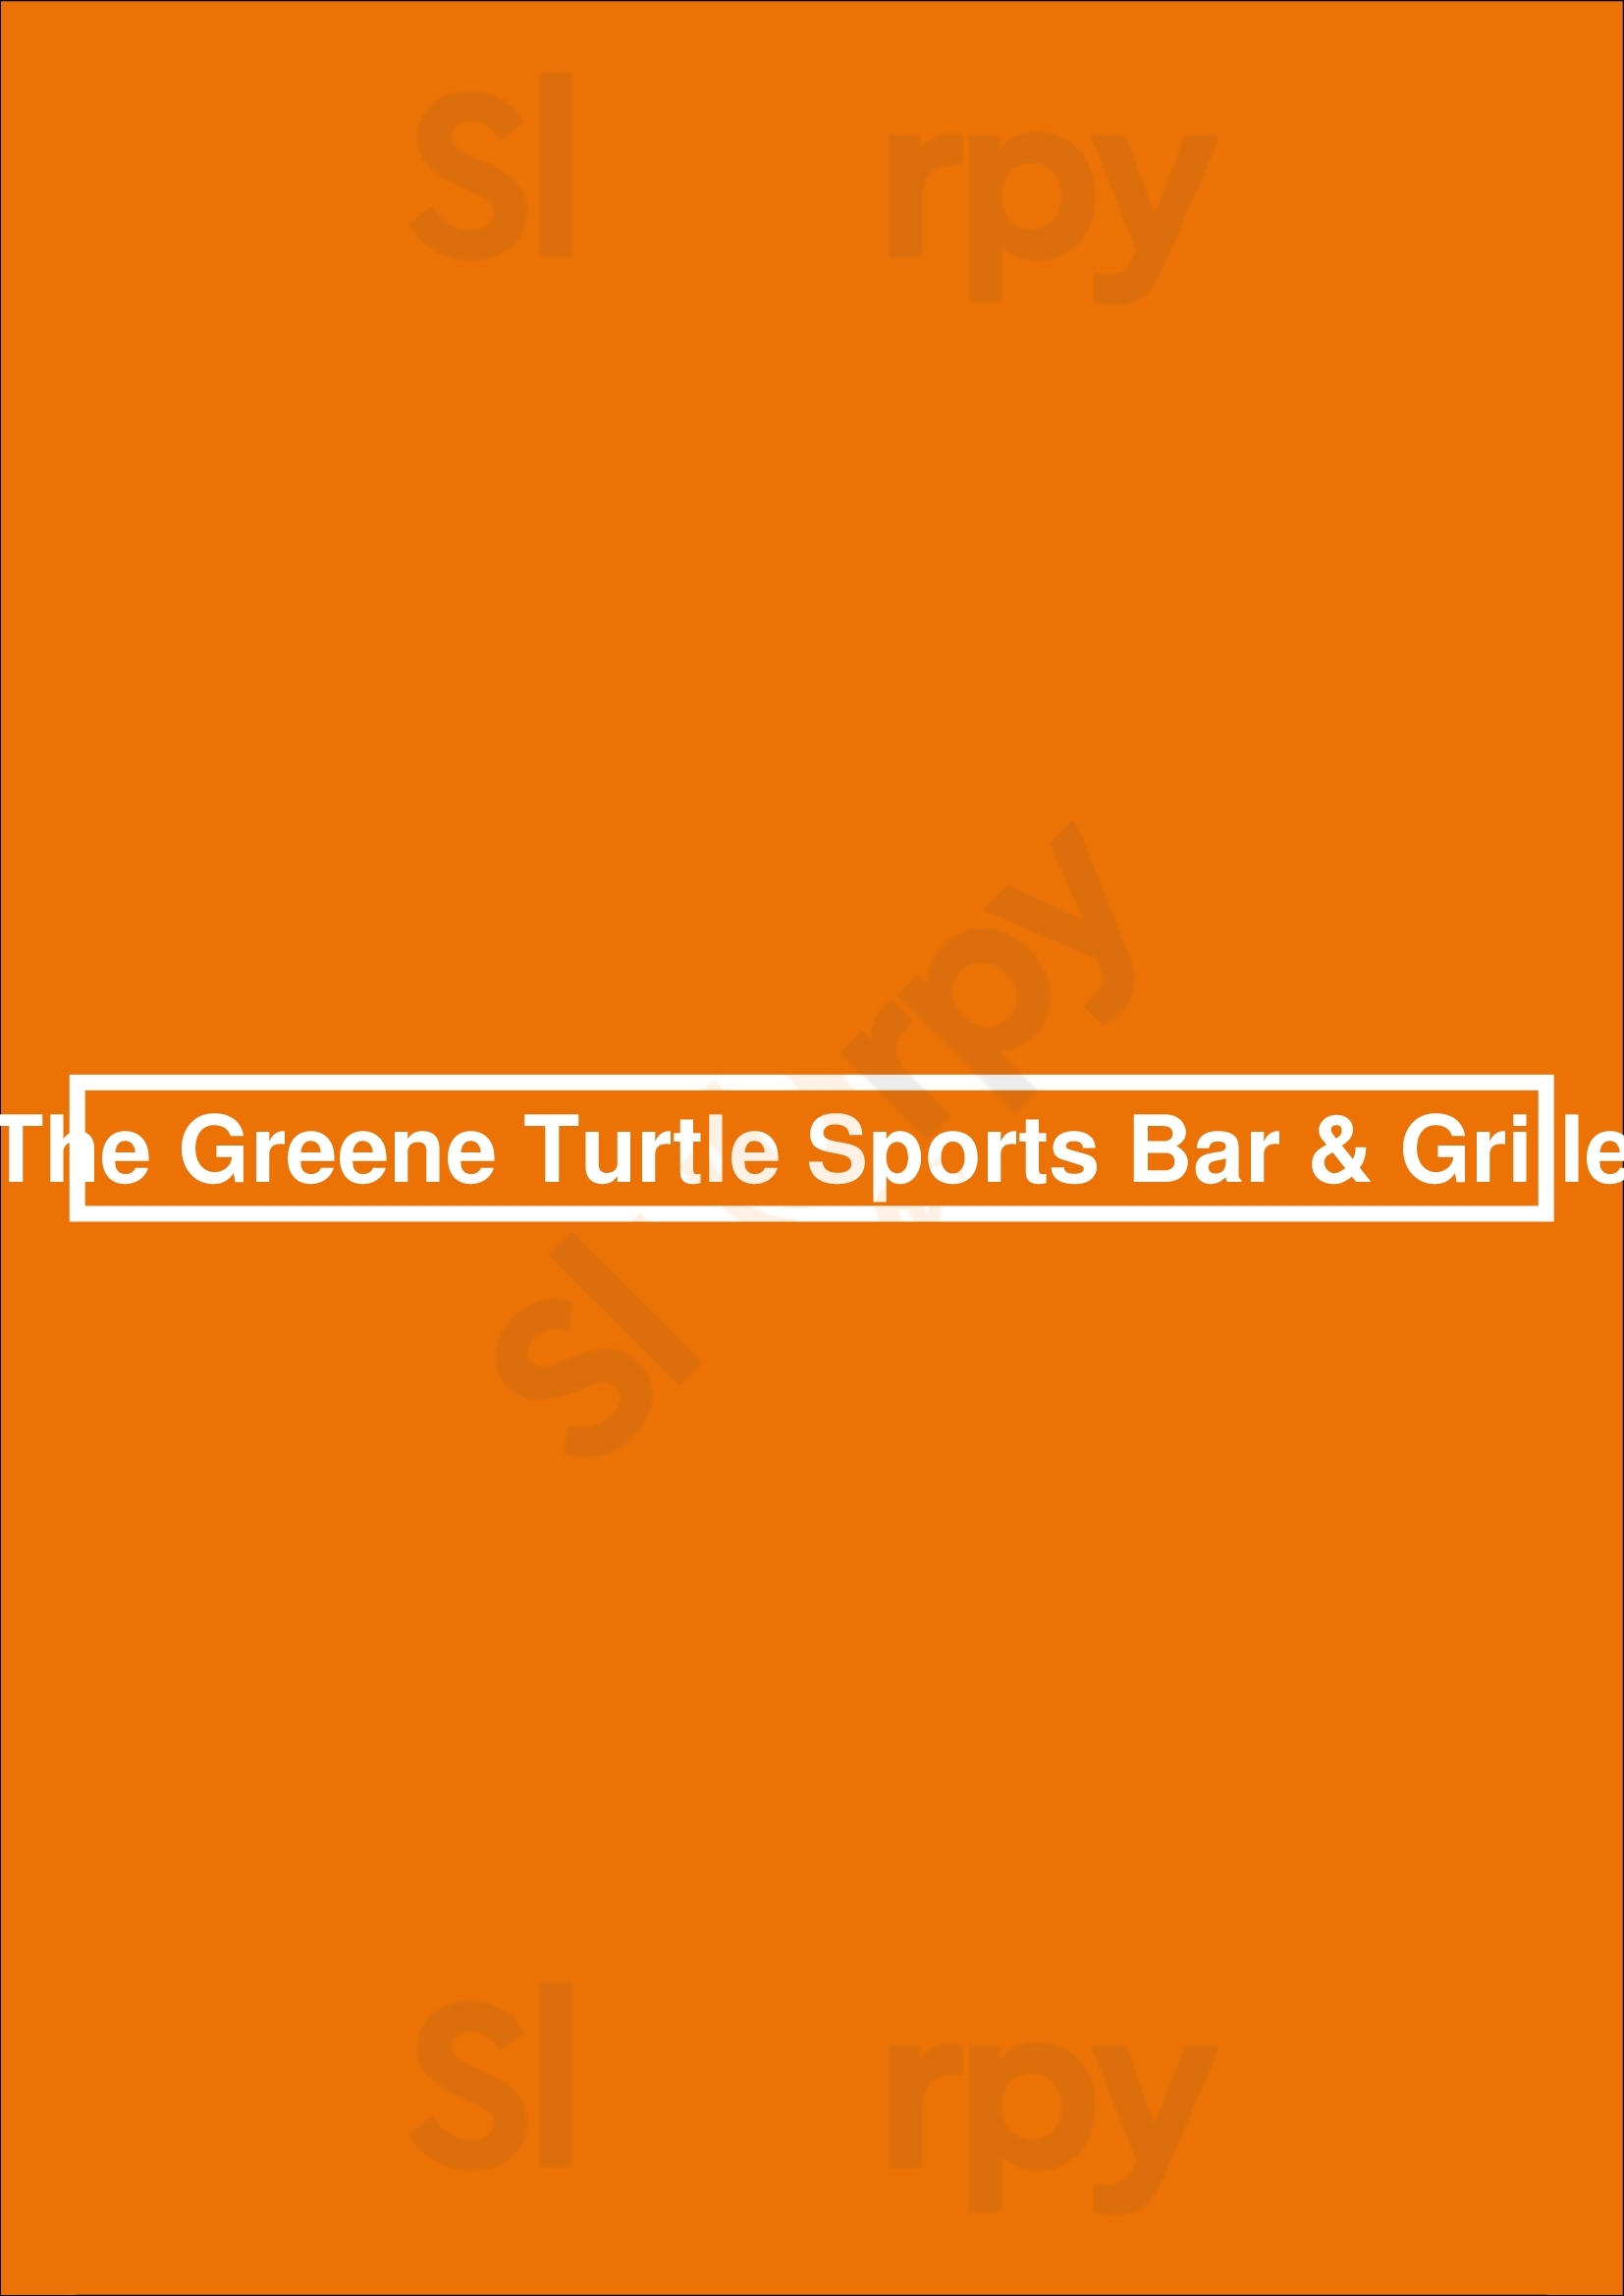 The Greene Turtle Sports Bar & Grille Newark Menu - 1